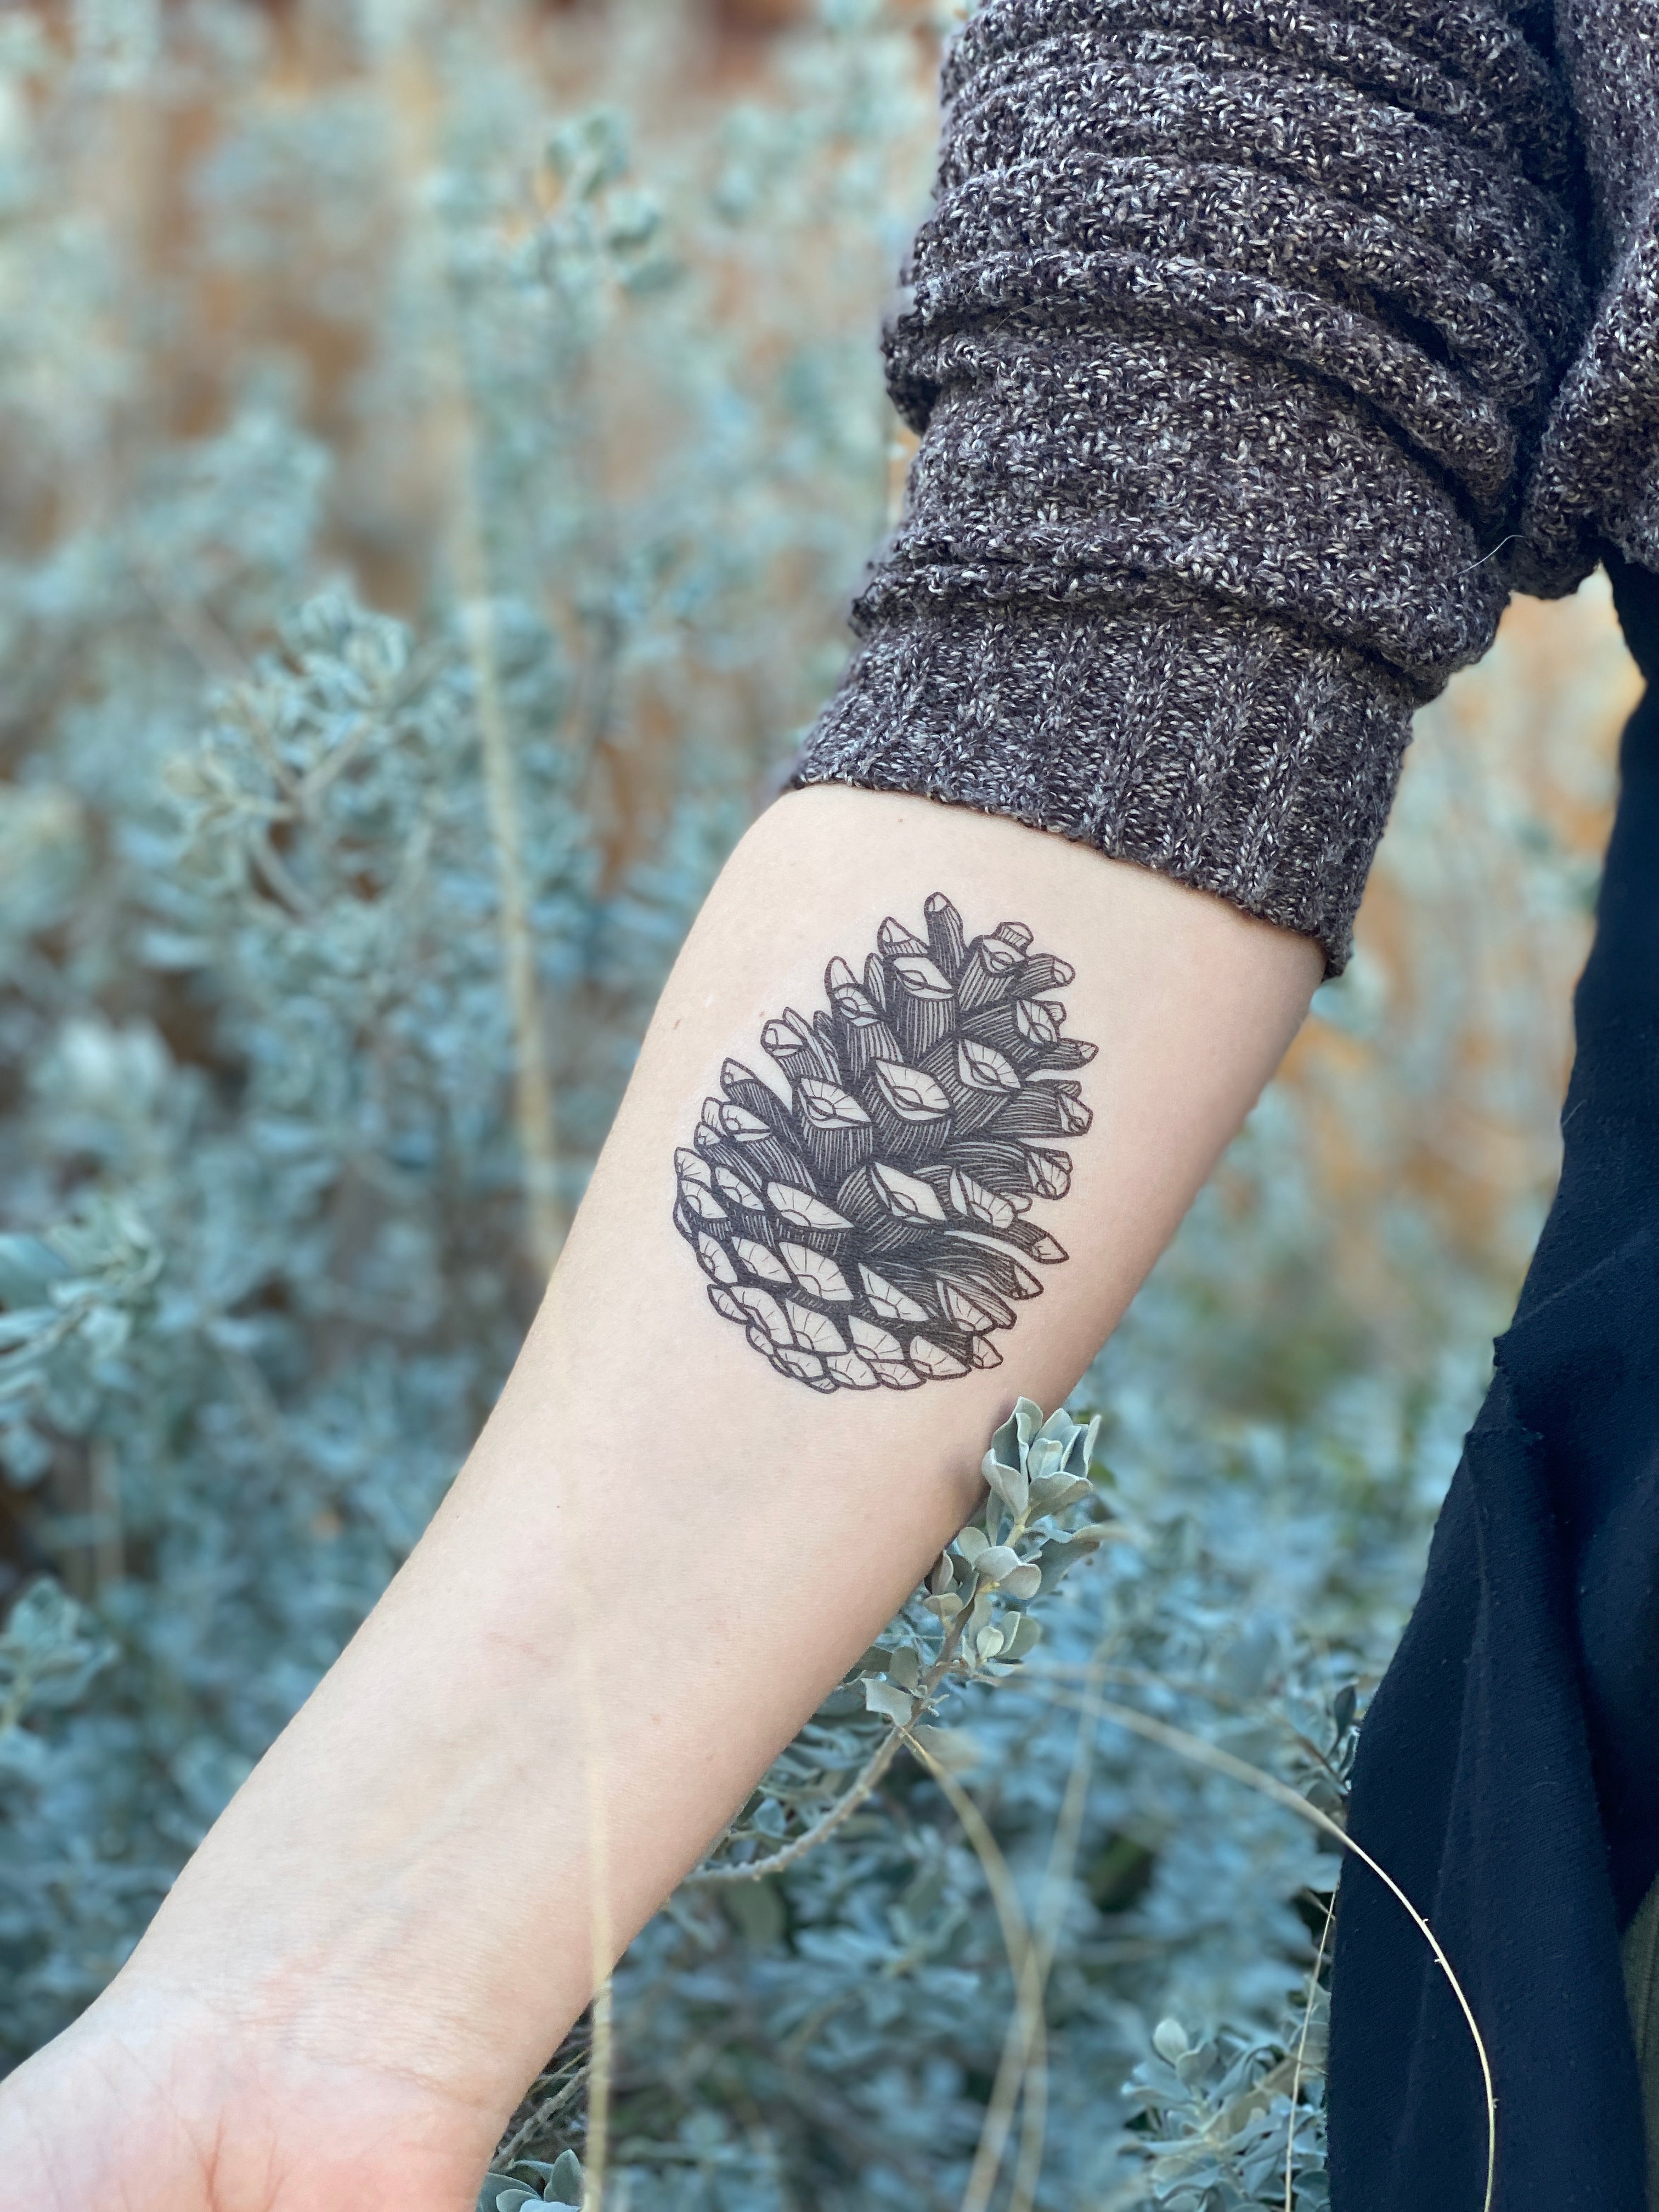 Pine cone tattoo